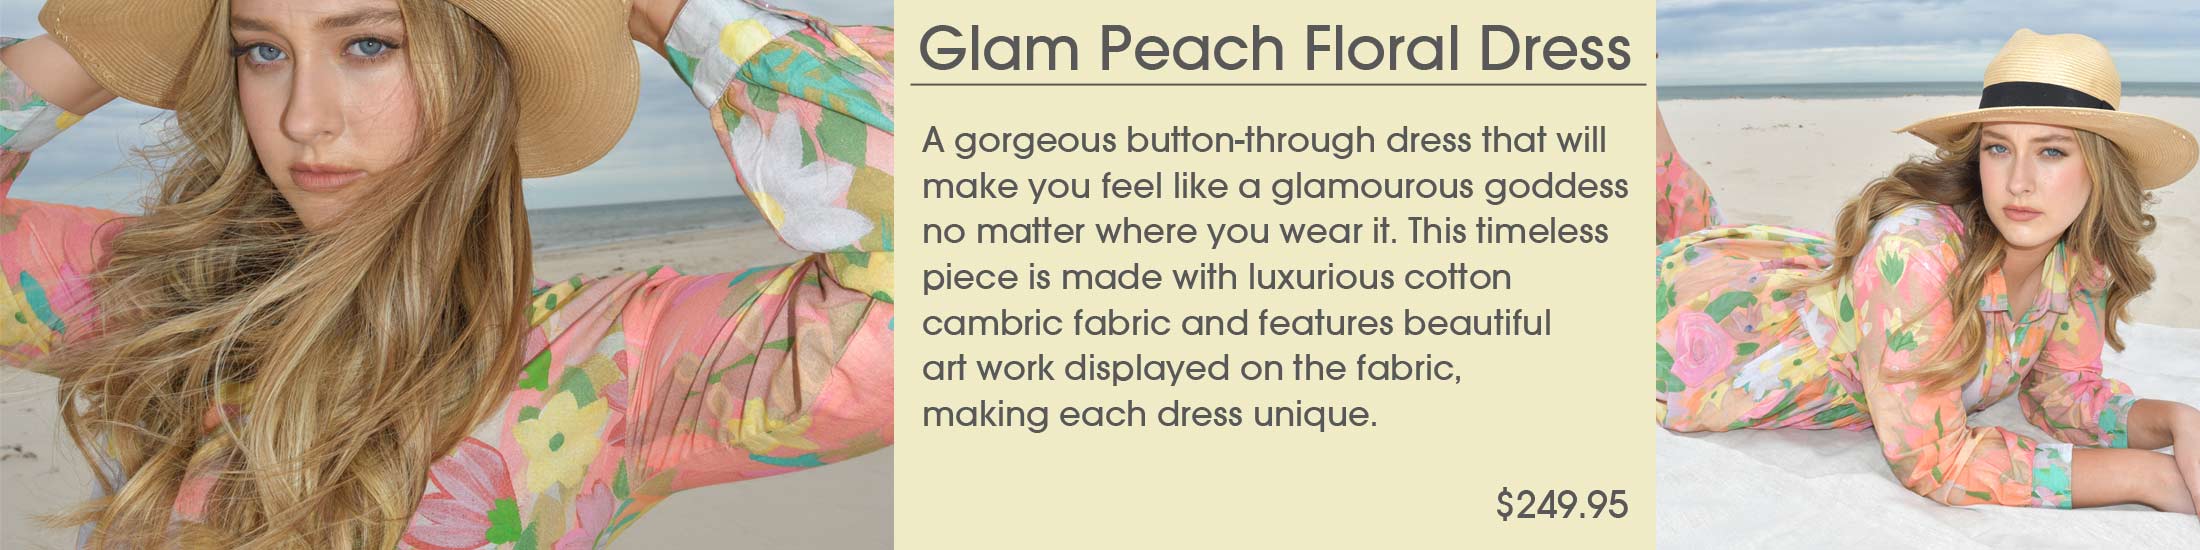 ELiza PIro glam peach floral dress